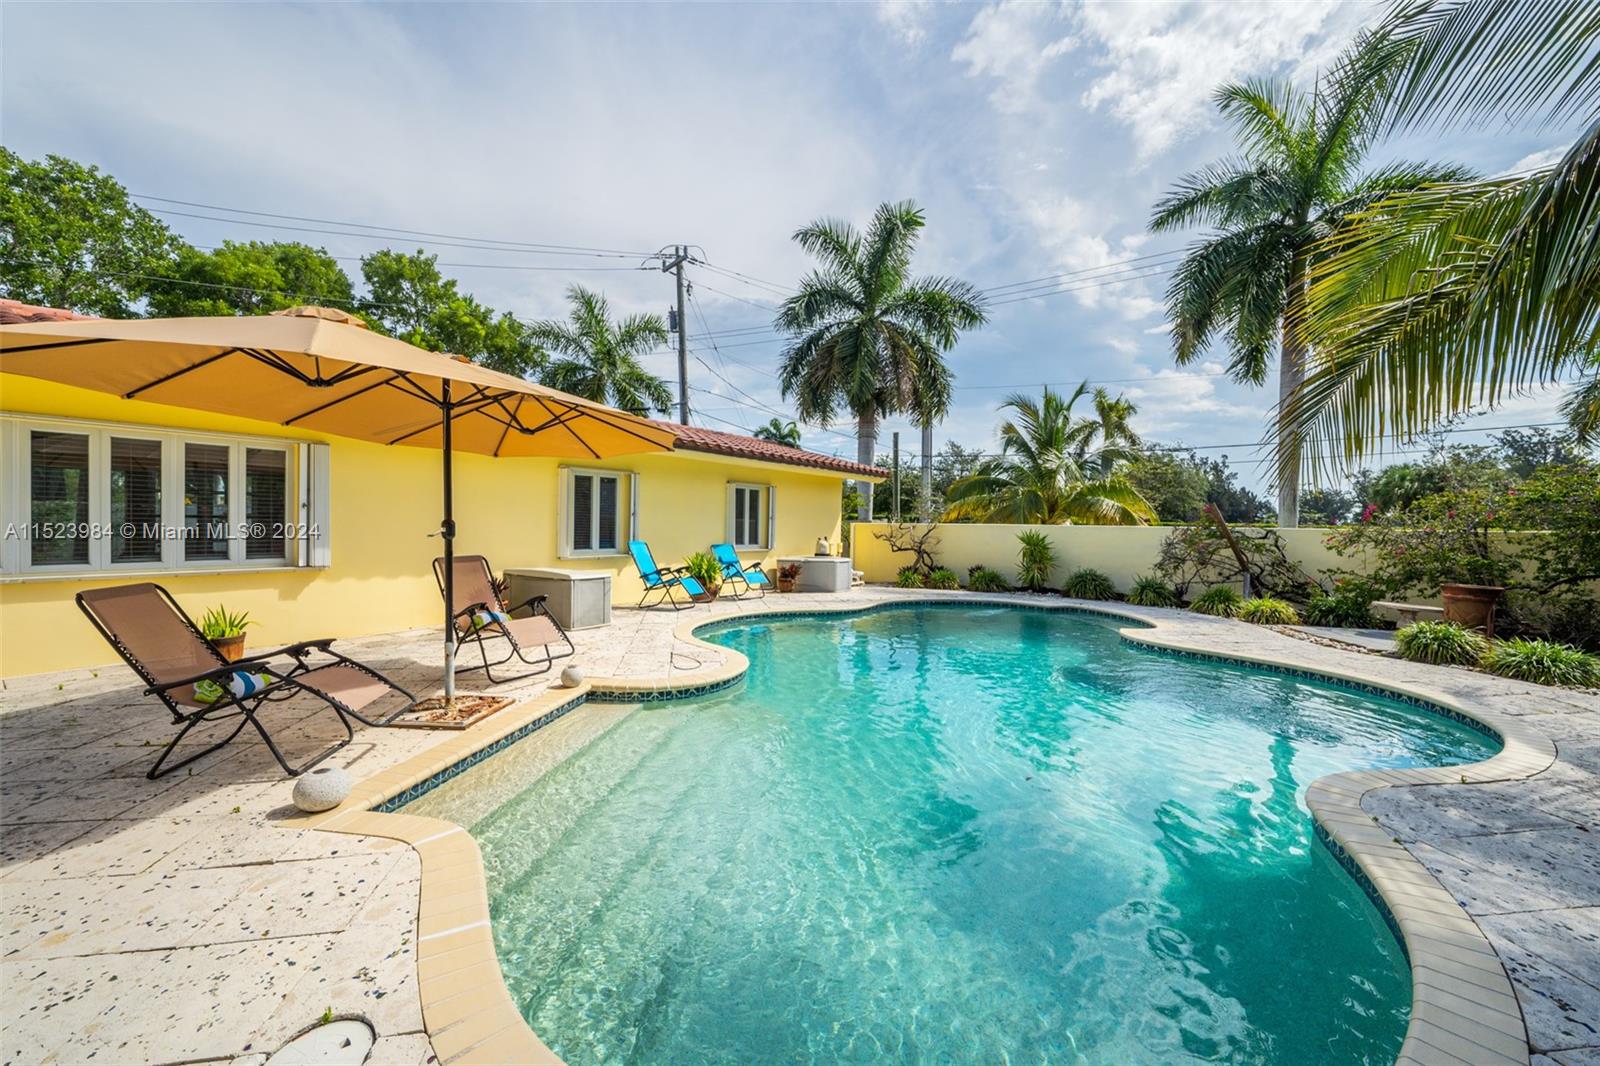 Property for Sale at 1005 Shore Ln, Miami Beach, Miami-Dade County, Florida - Bedrooms: 3 
Bathrooms: 2  - $2,225,000